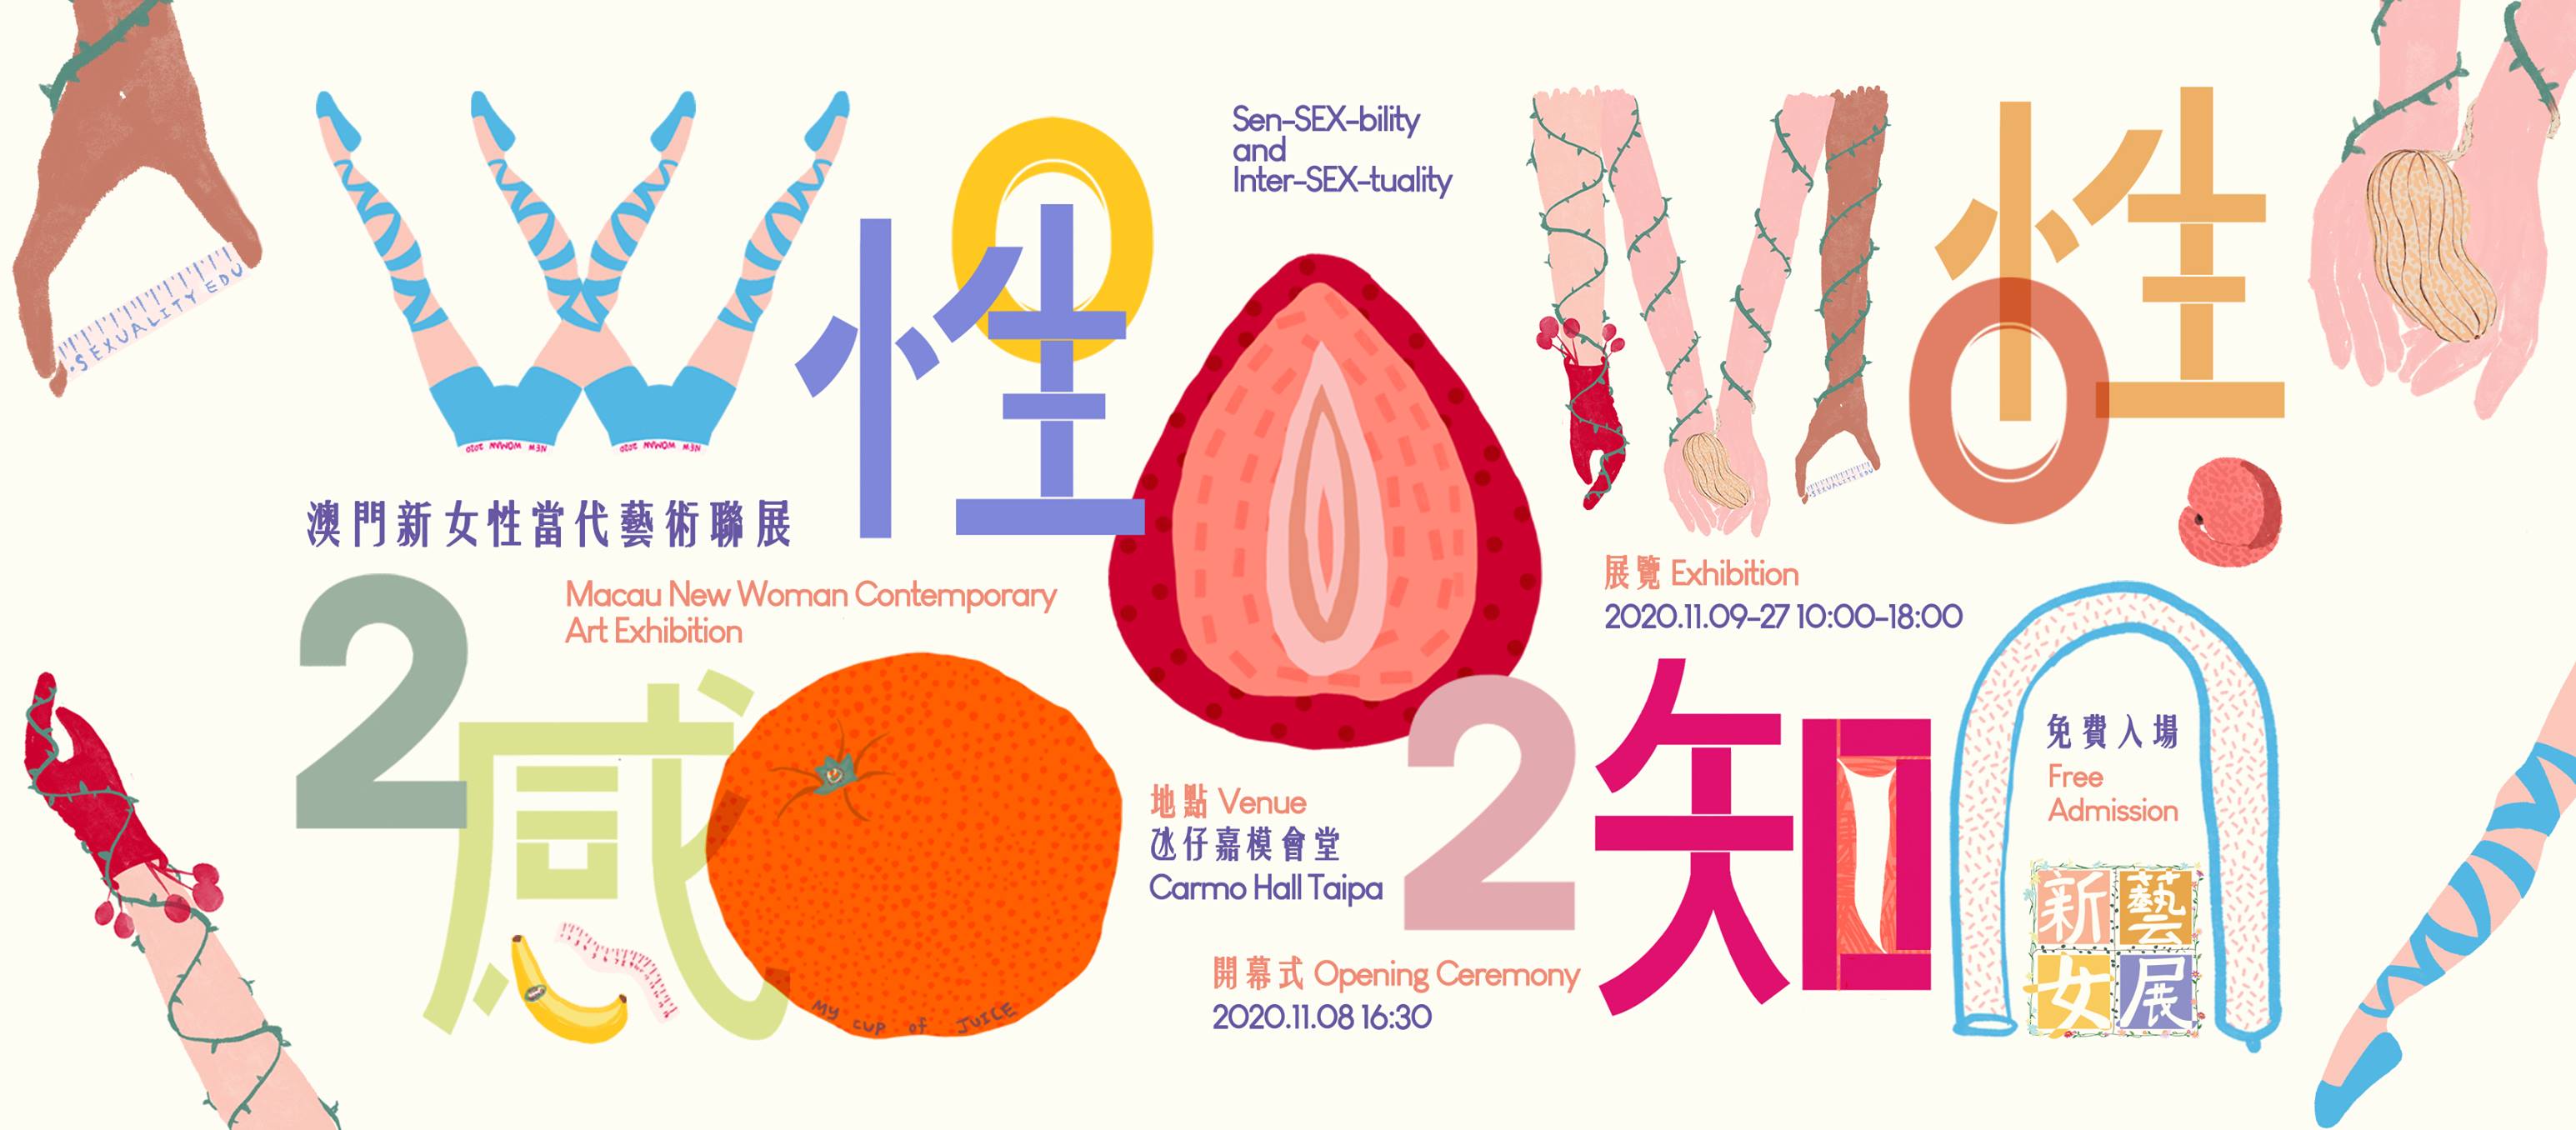 2020 Macau New Woman Contemporary Art Exhibition Poster